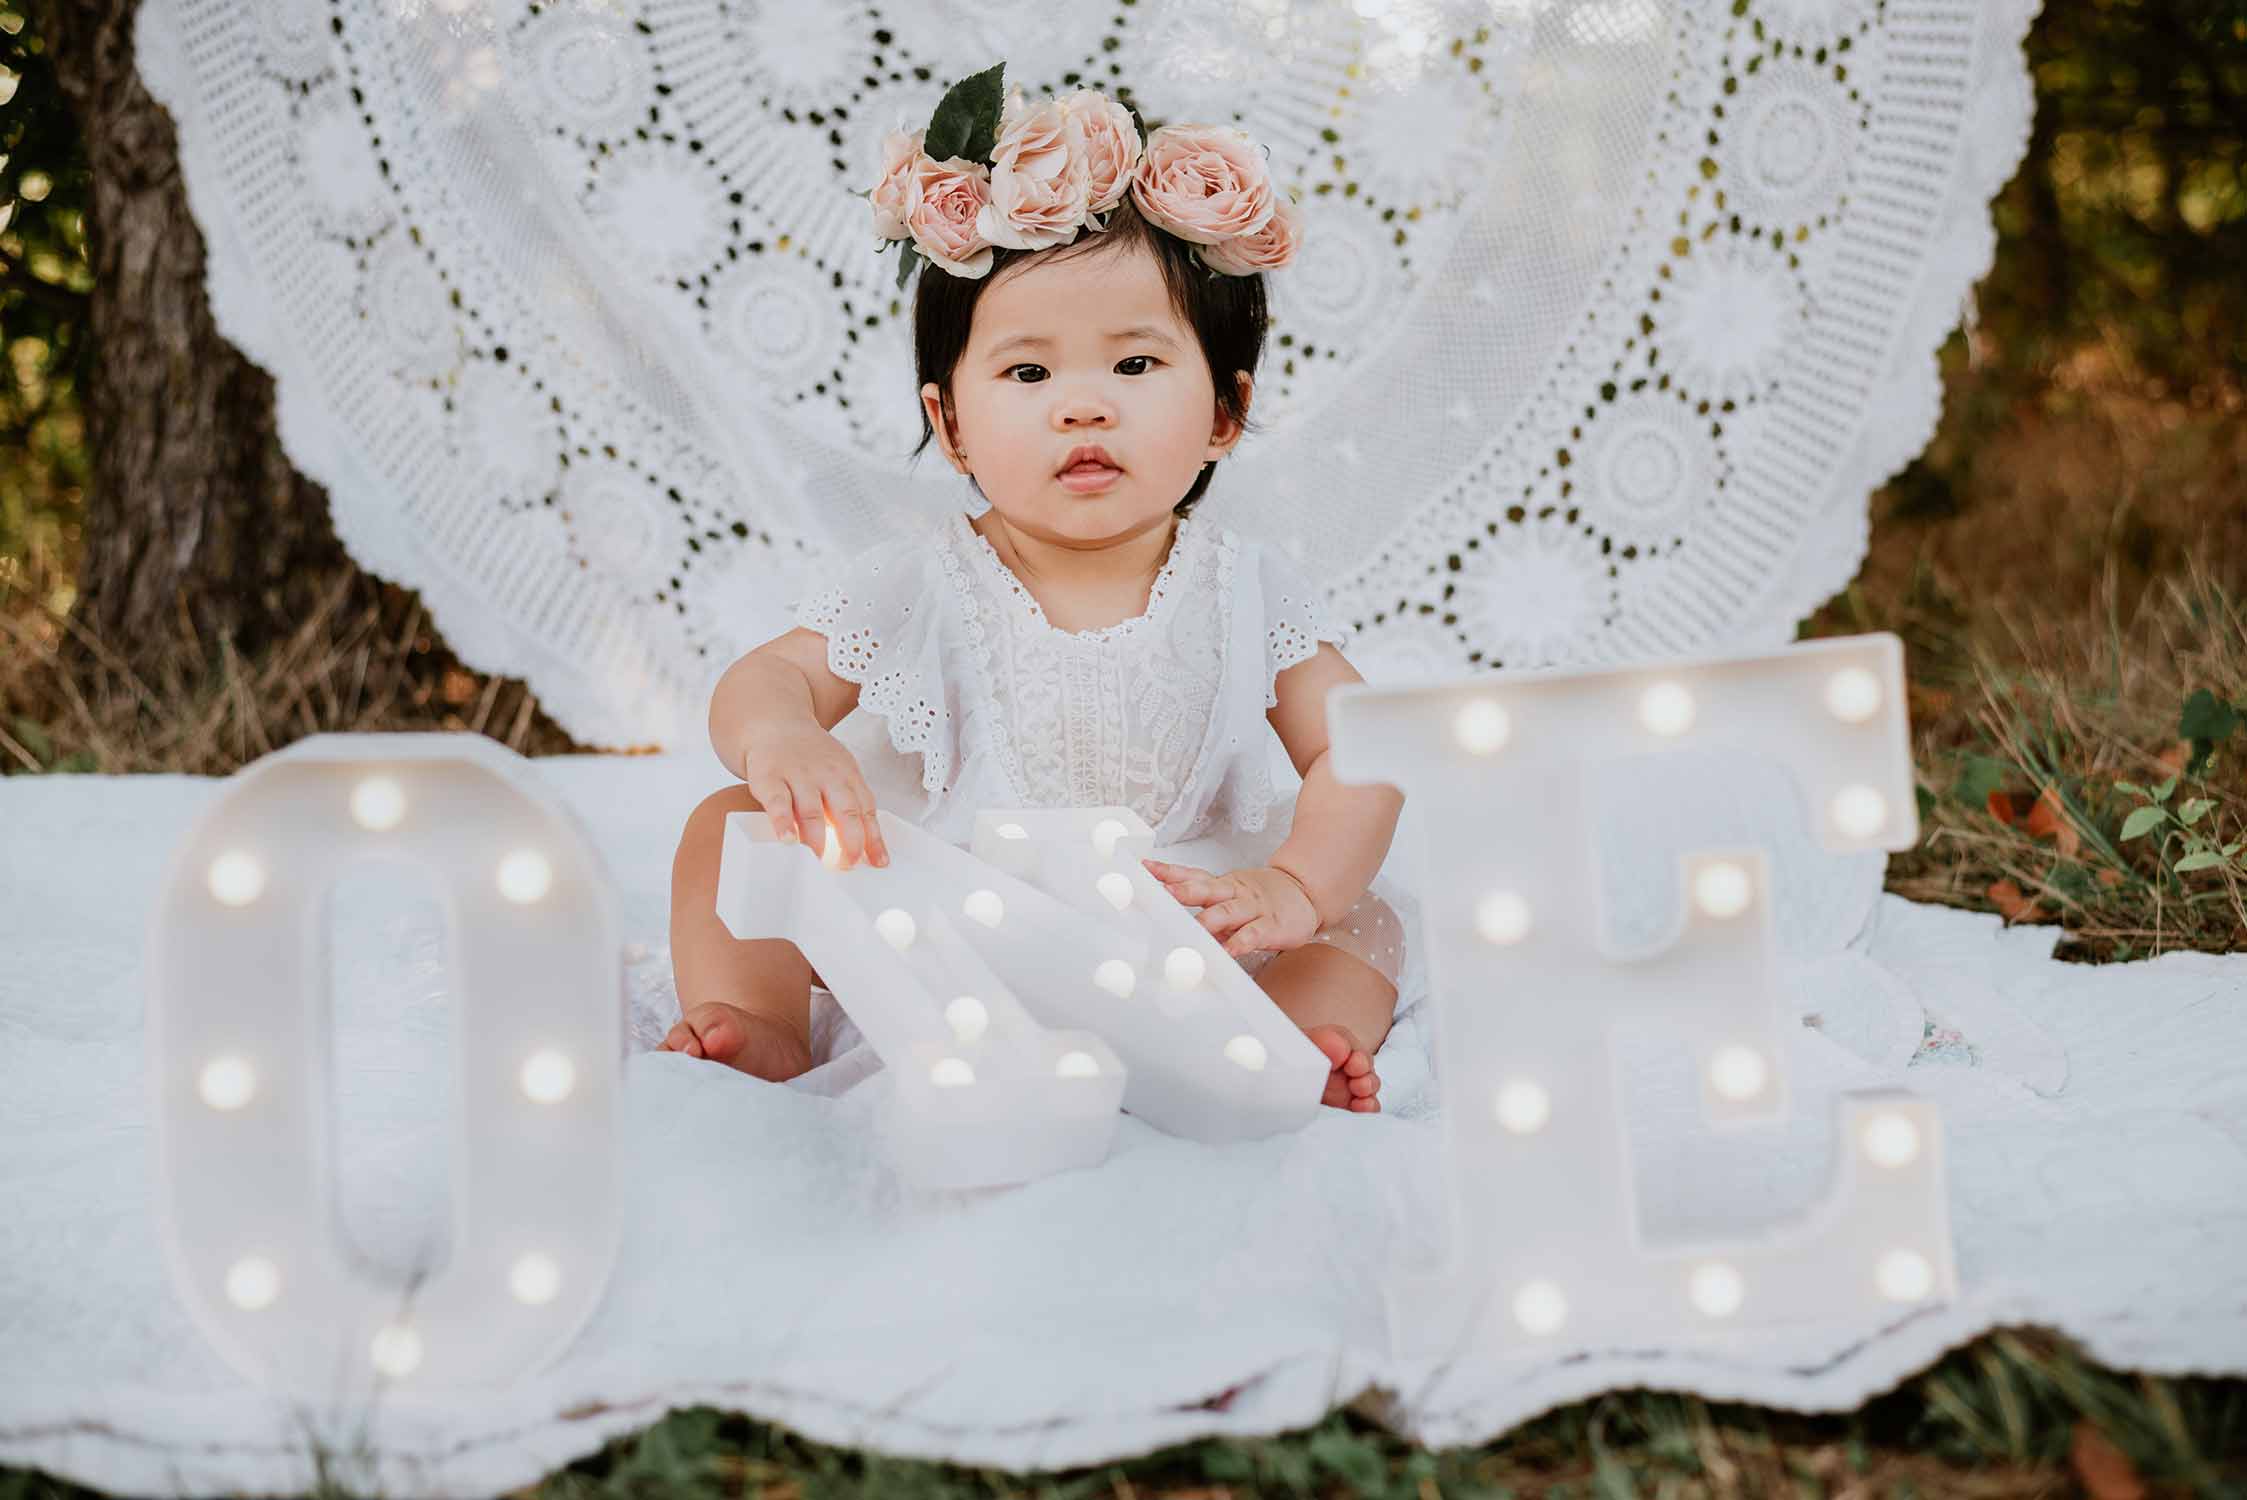 Plano baby photographer | Christina Freeman Photography